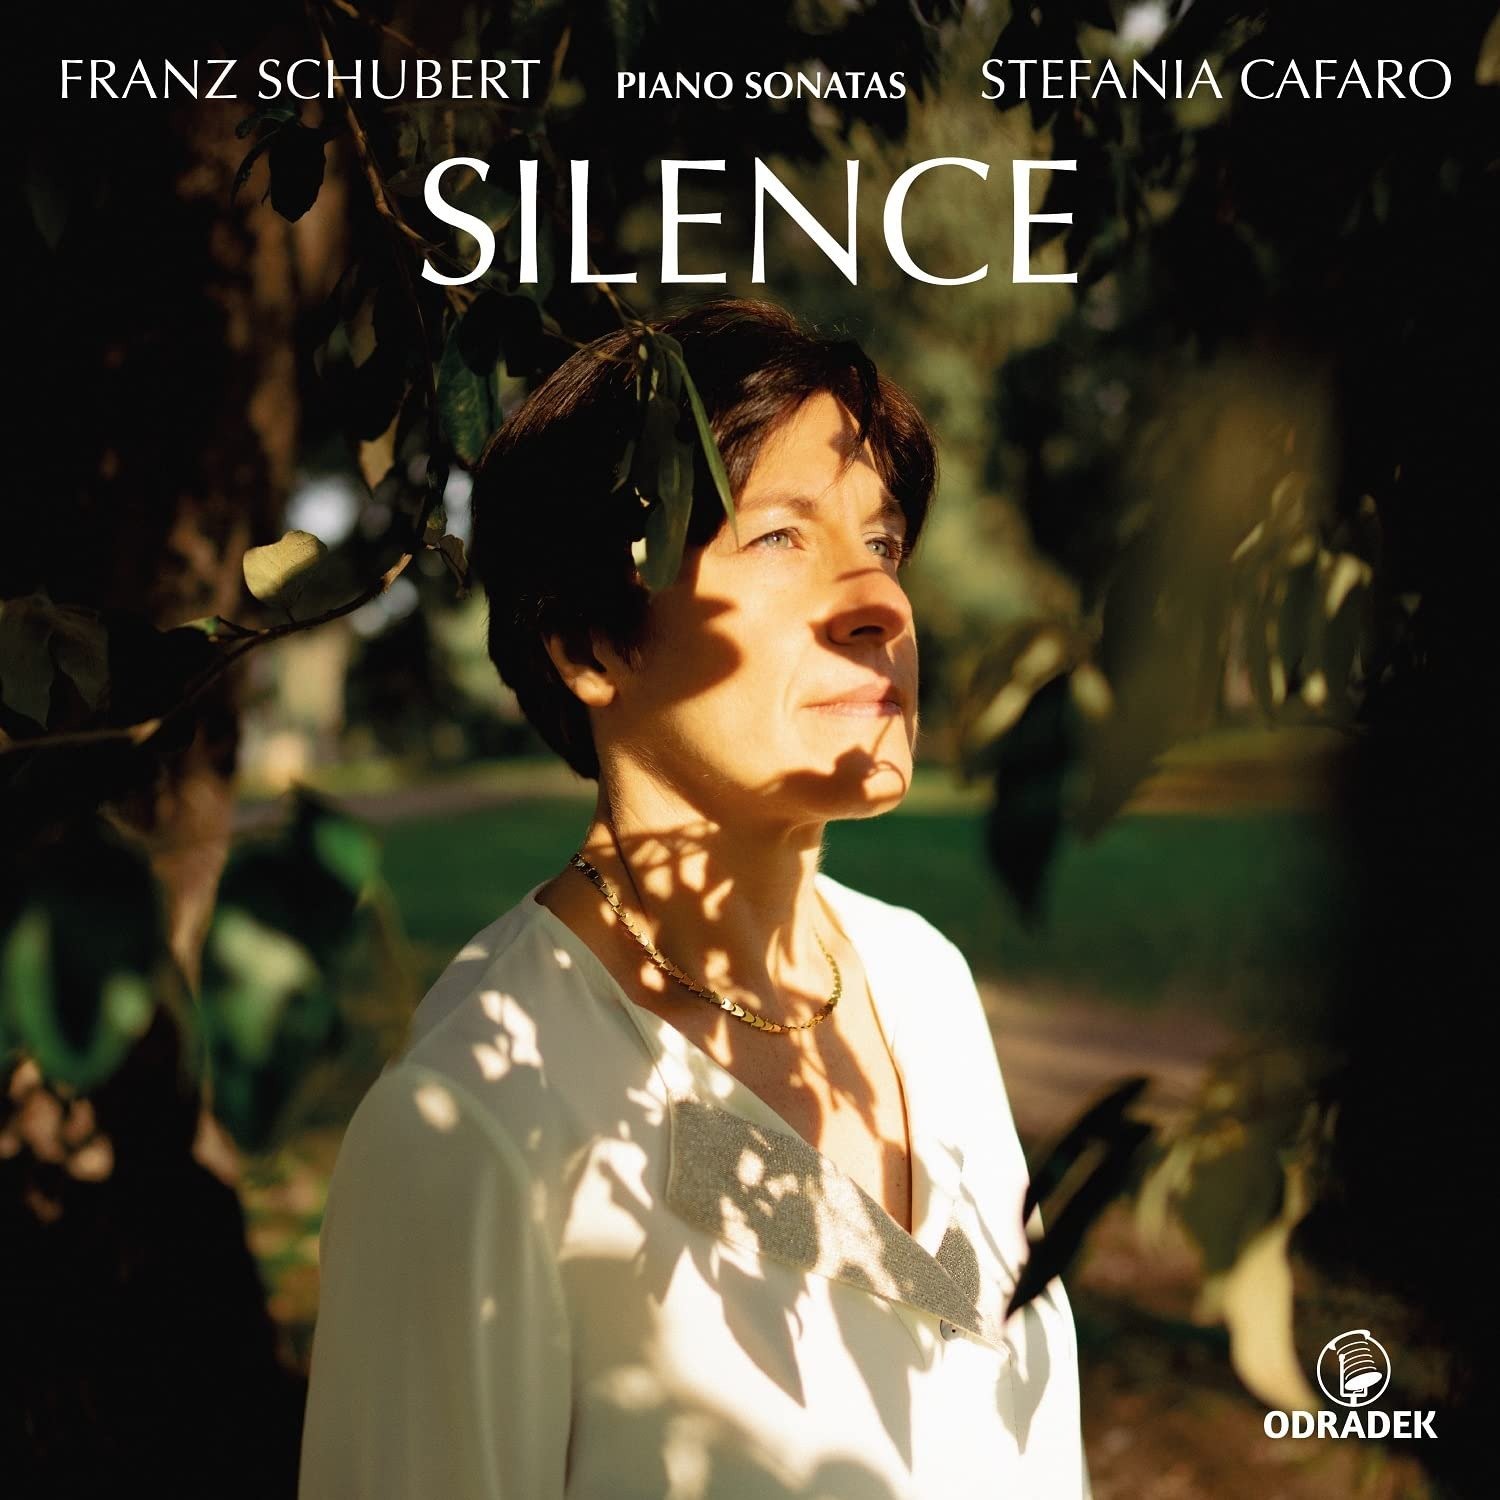 CD Shop - CAFARO, STEFANIA SILENCE - PIANO SONATAS BY SCHUBERT